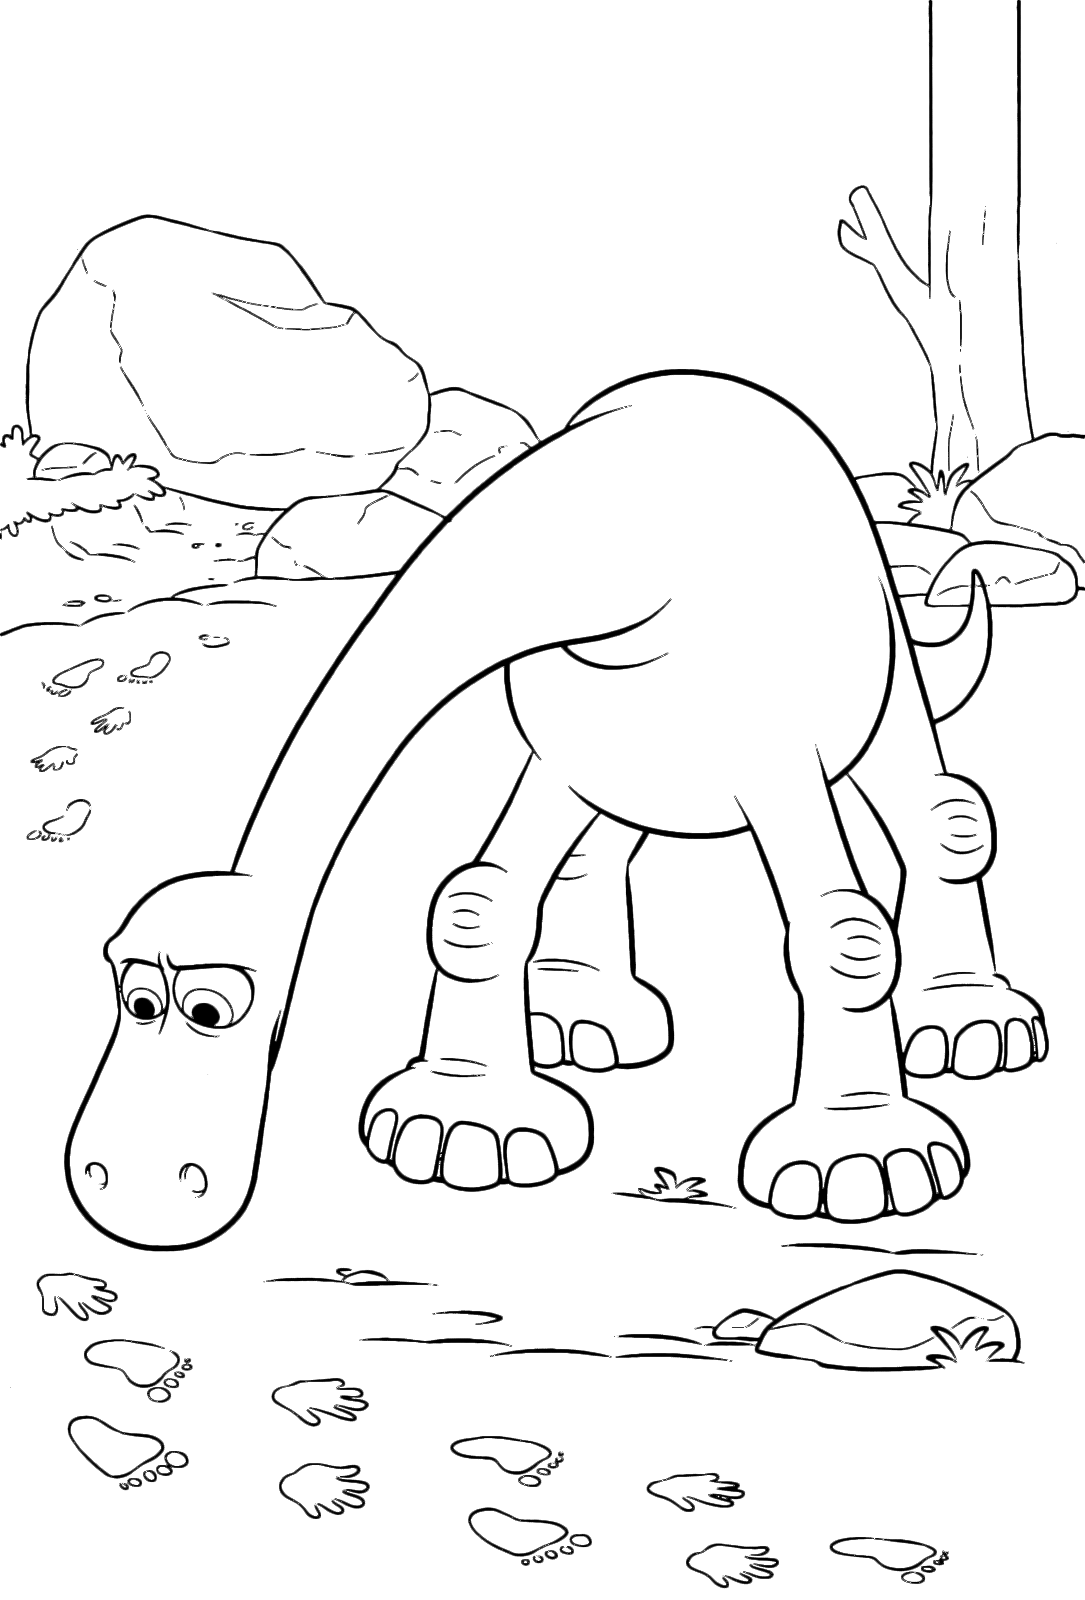 The Good Dinosaur - Arlo follows the footsteps of Spot